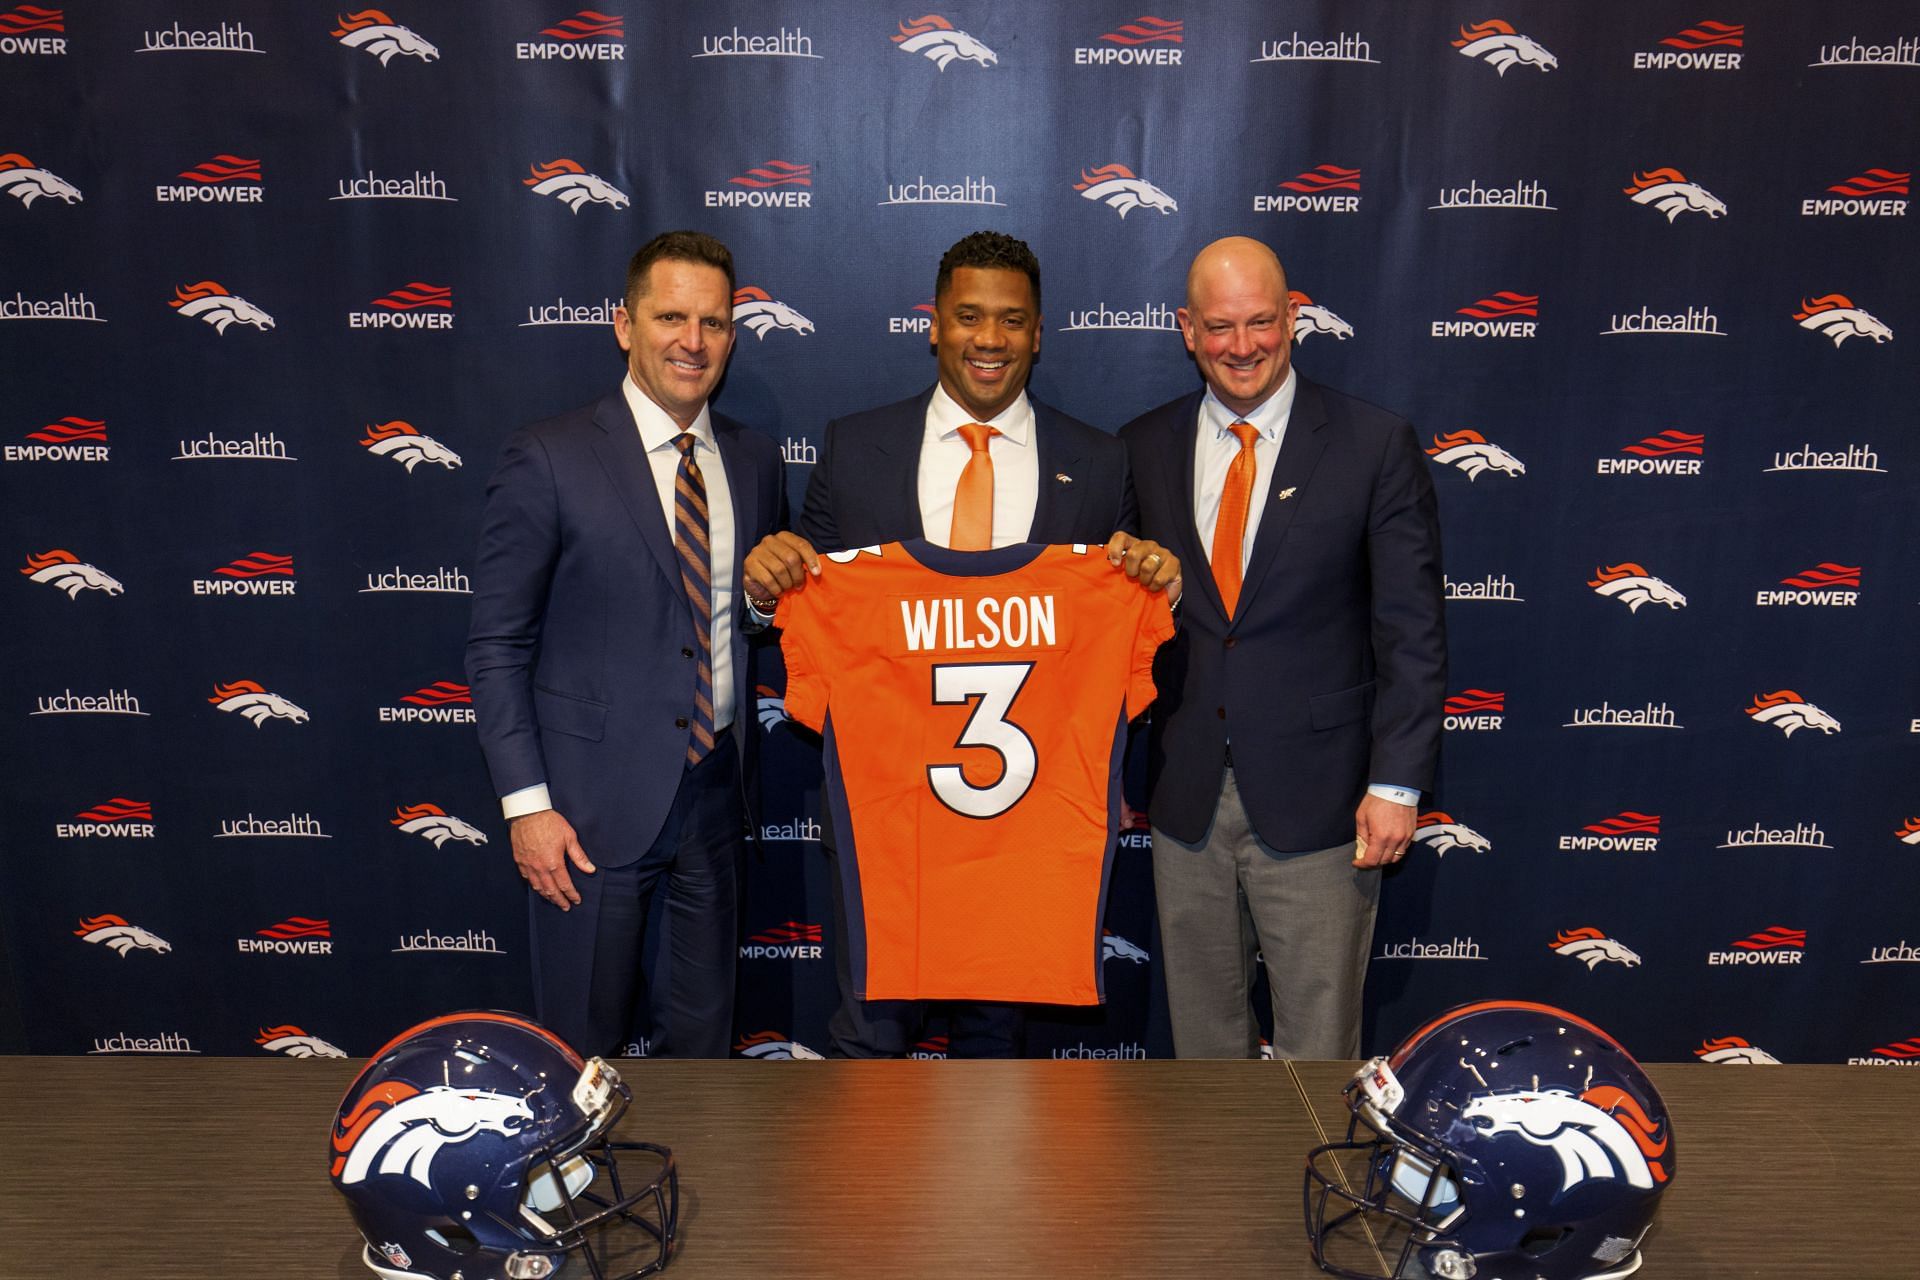 Denver Broncos Oyun Kurucu Russell Wilson'ı Tanıttı